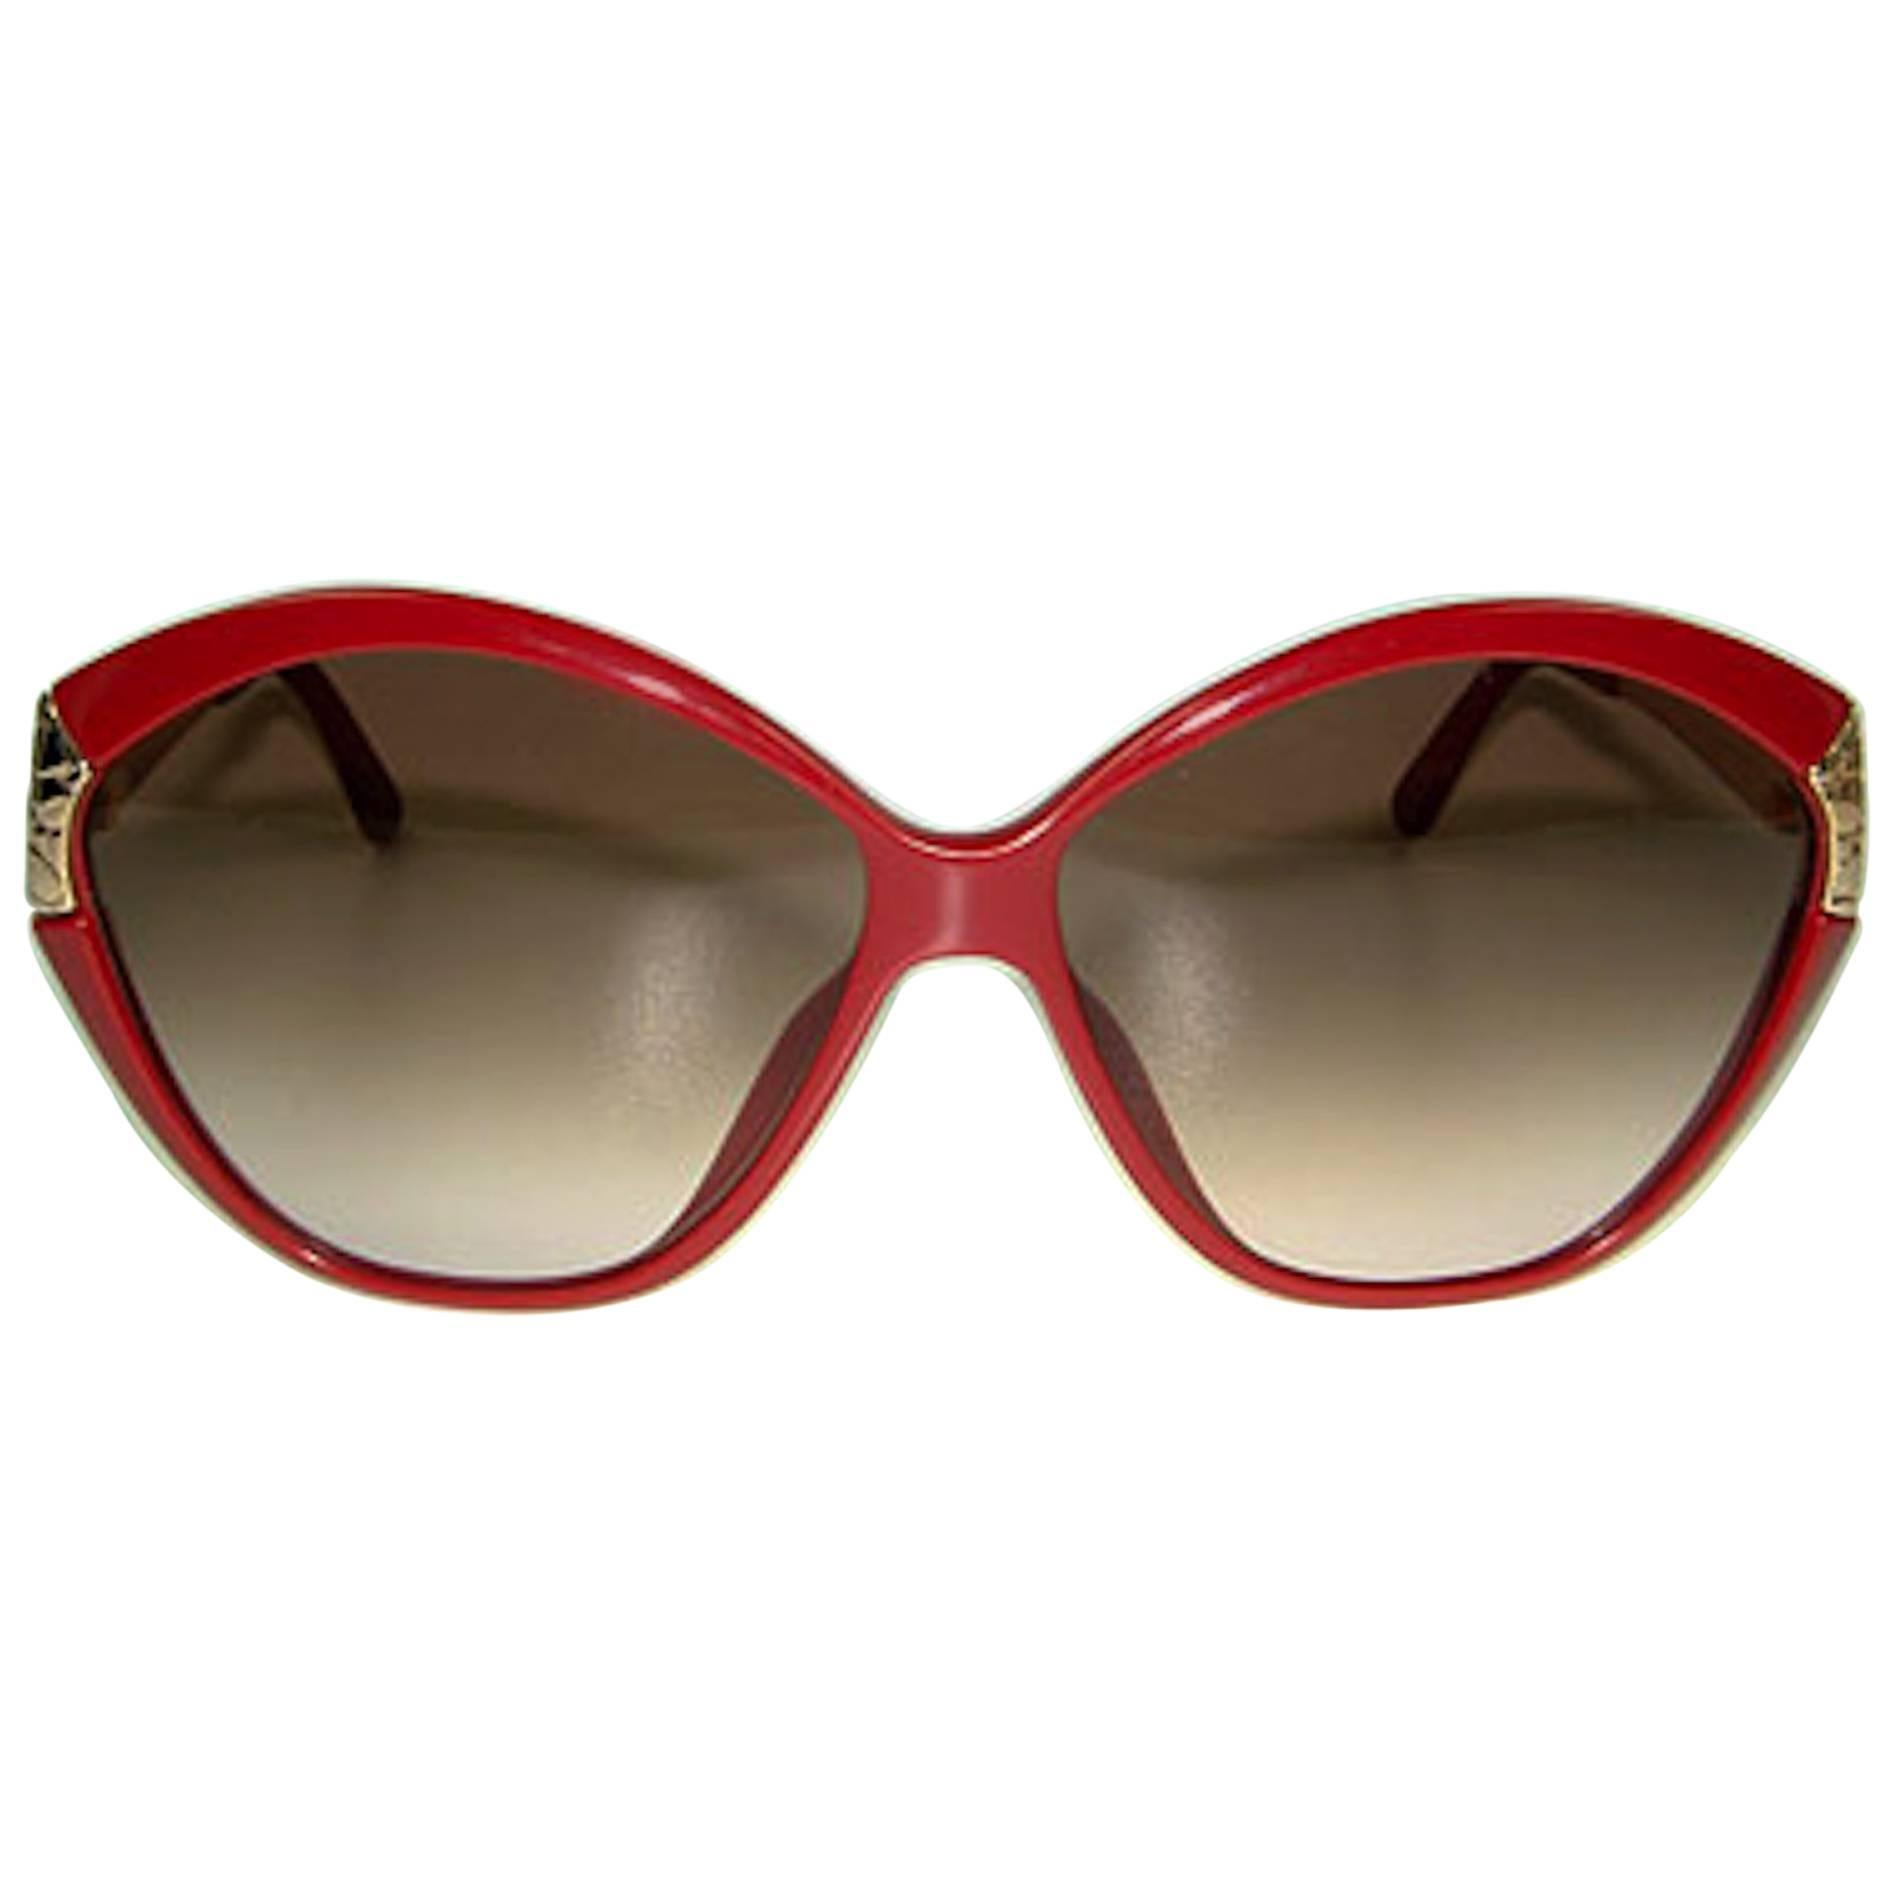 Vintage Christian Dior Sunglasses For Sale